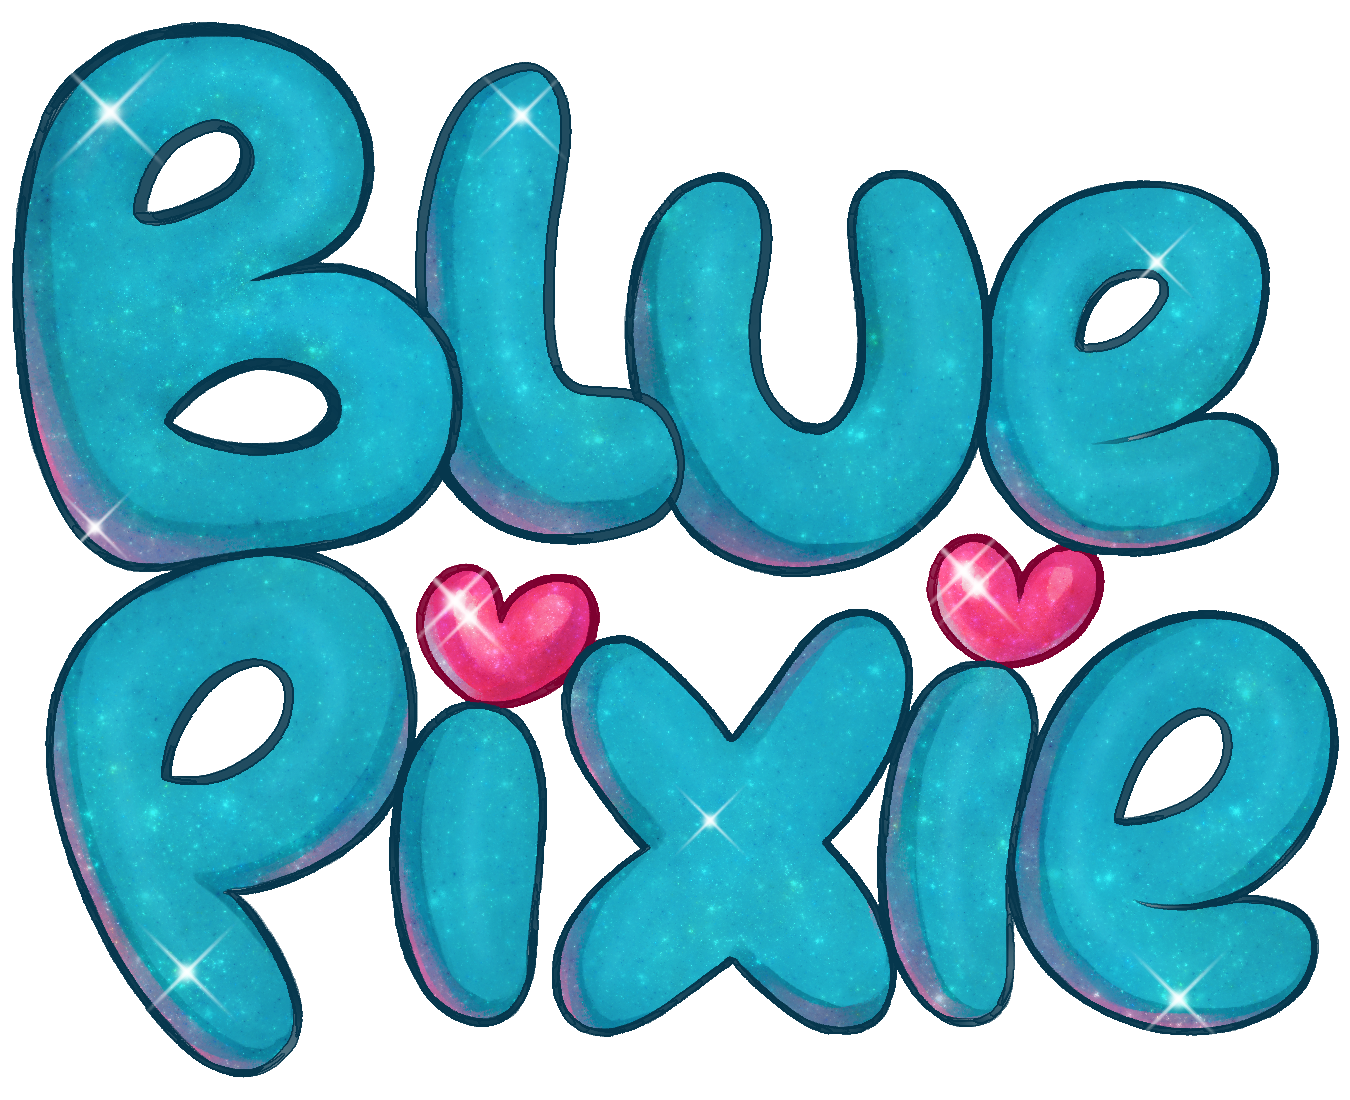 Blue Pixie Art